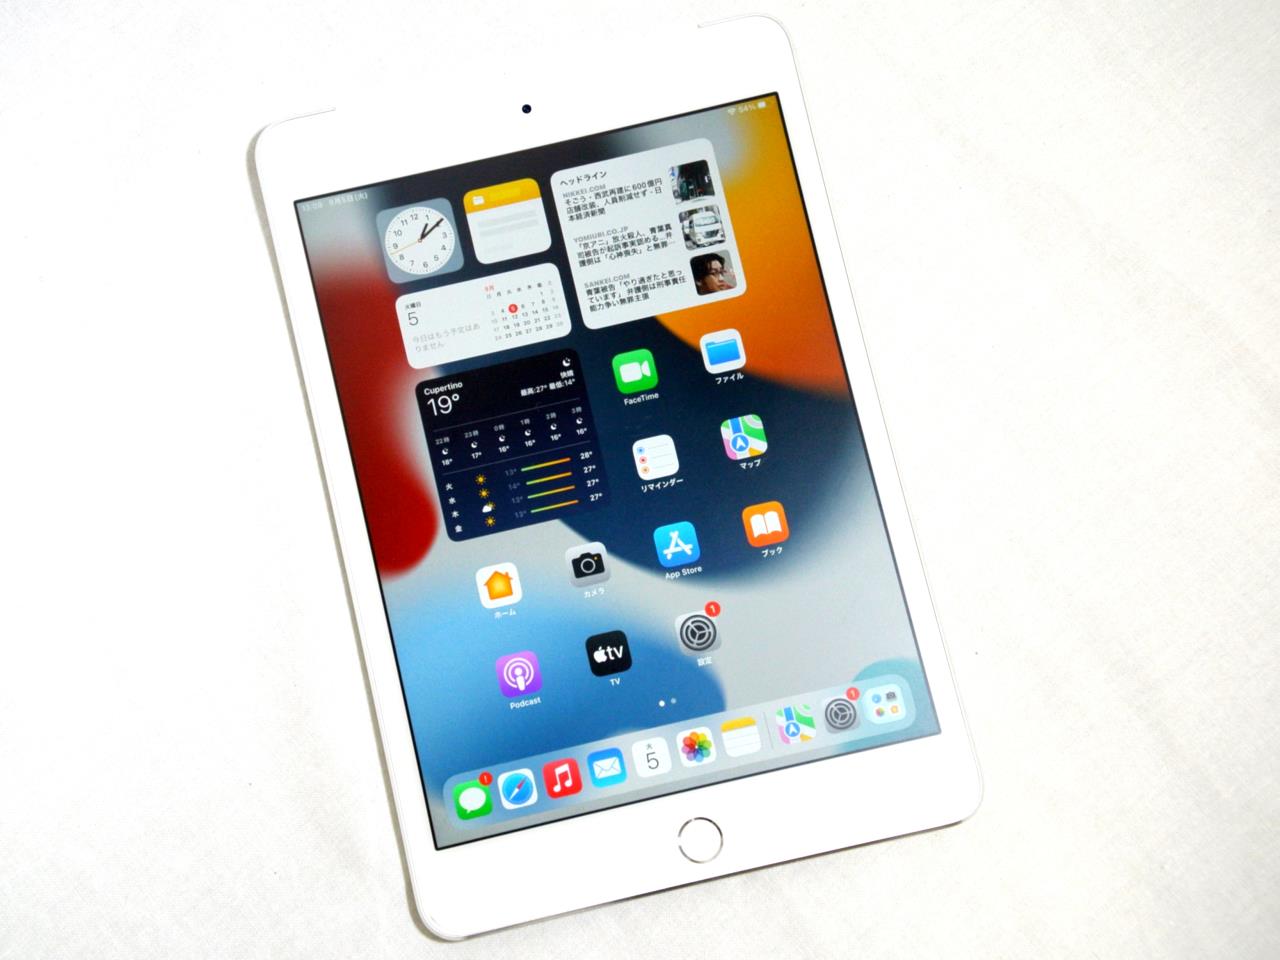 iPad mini 4 Wi-Fi+Cellular 16GB シルバー - PC/タブレット